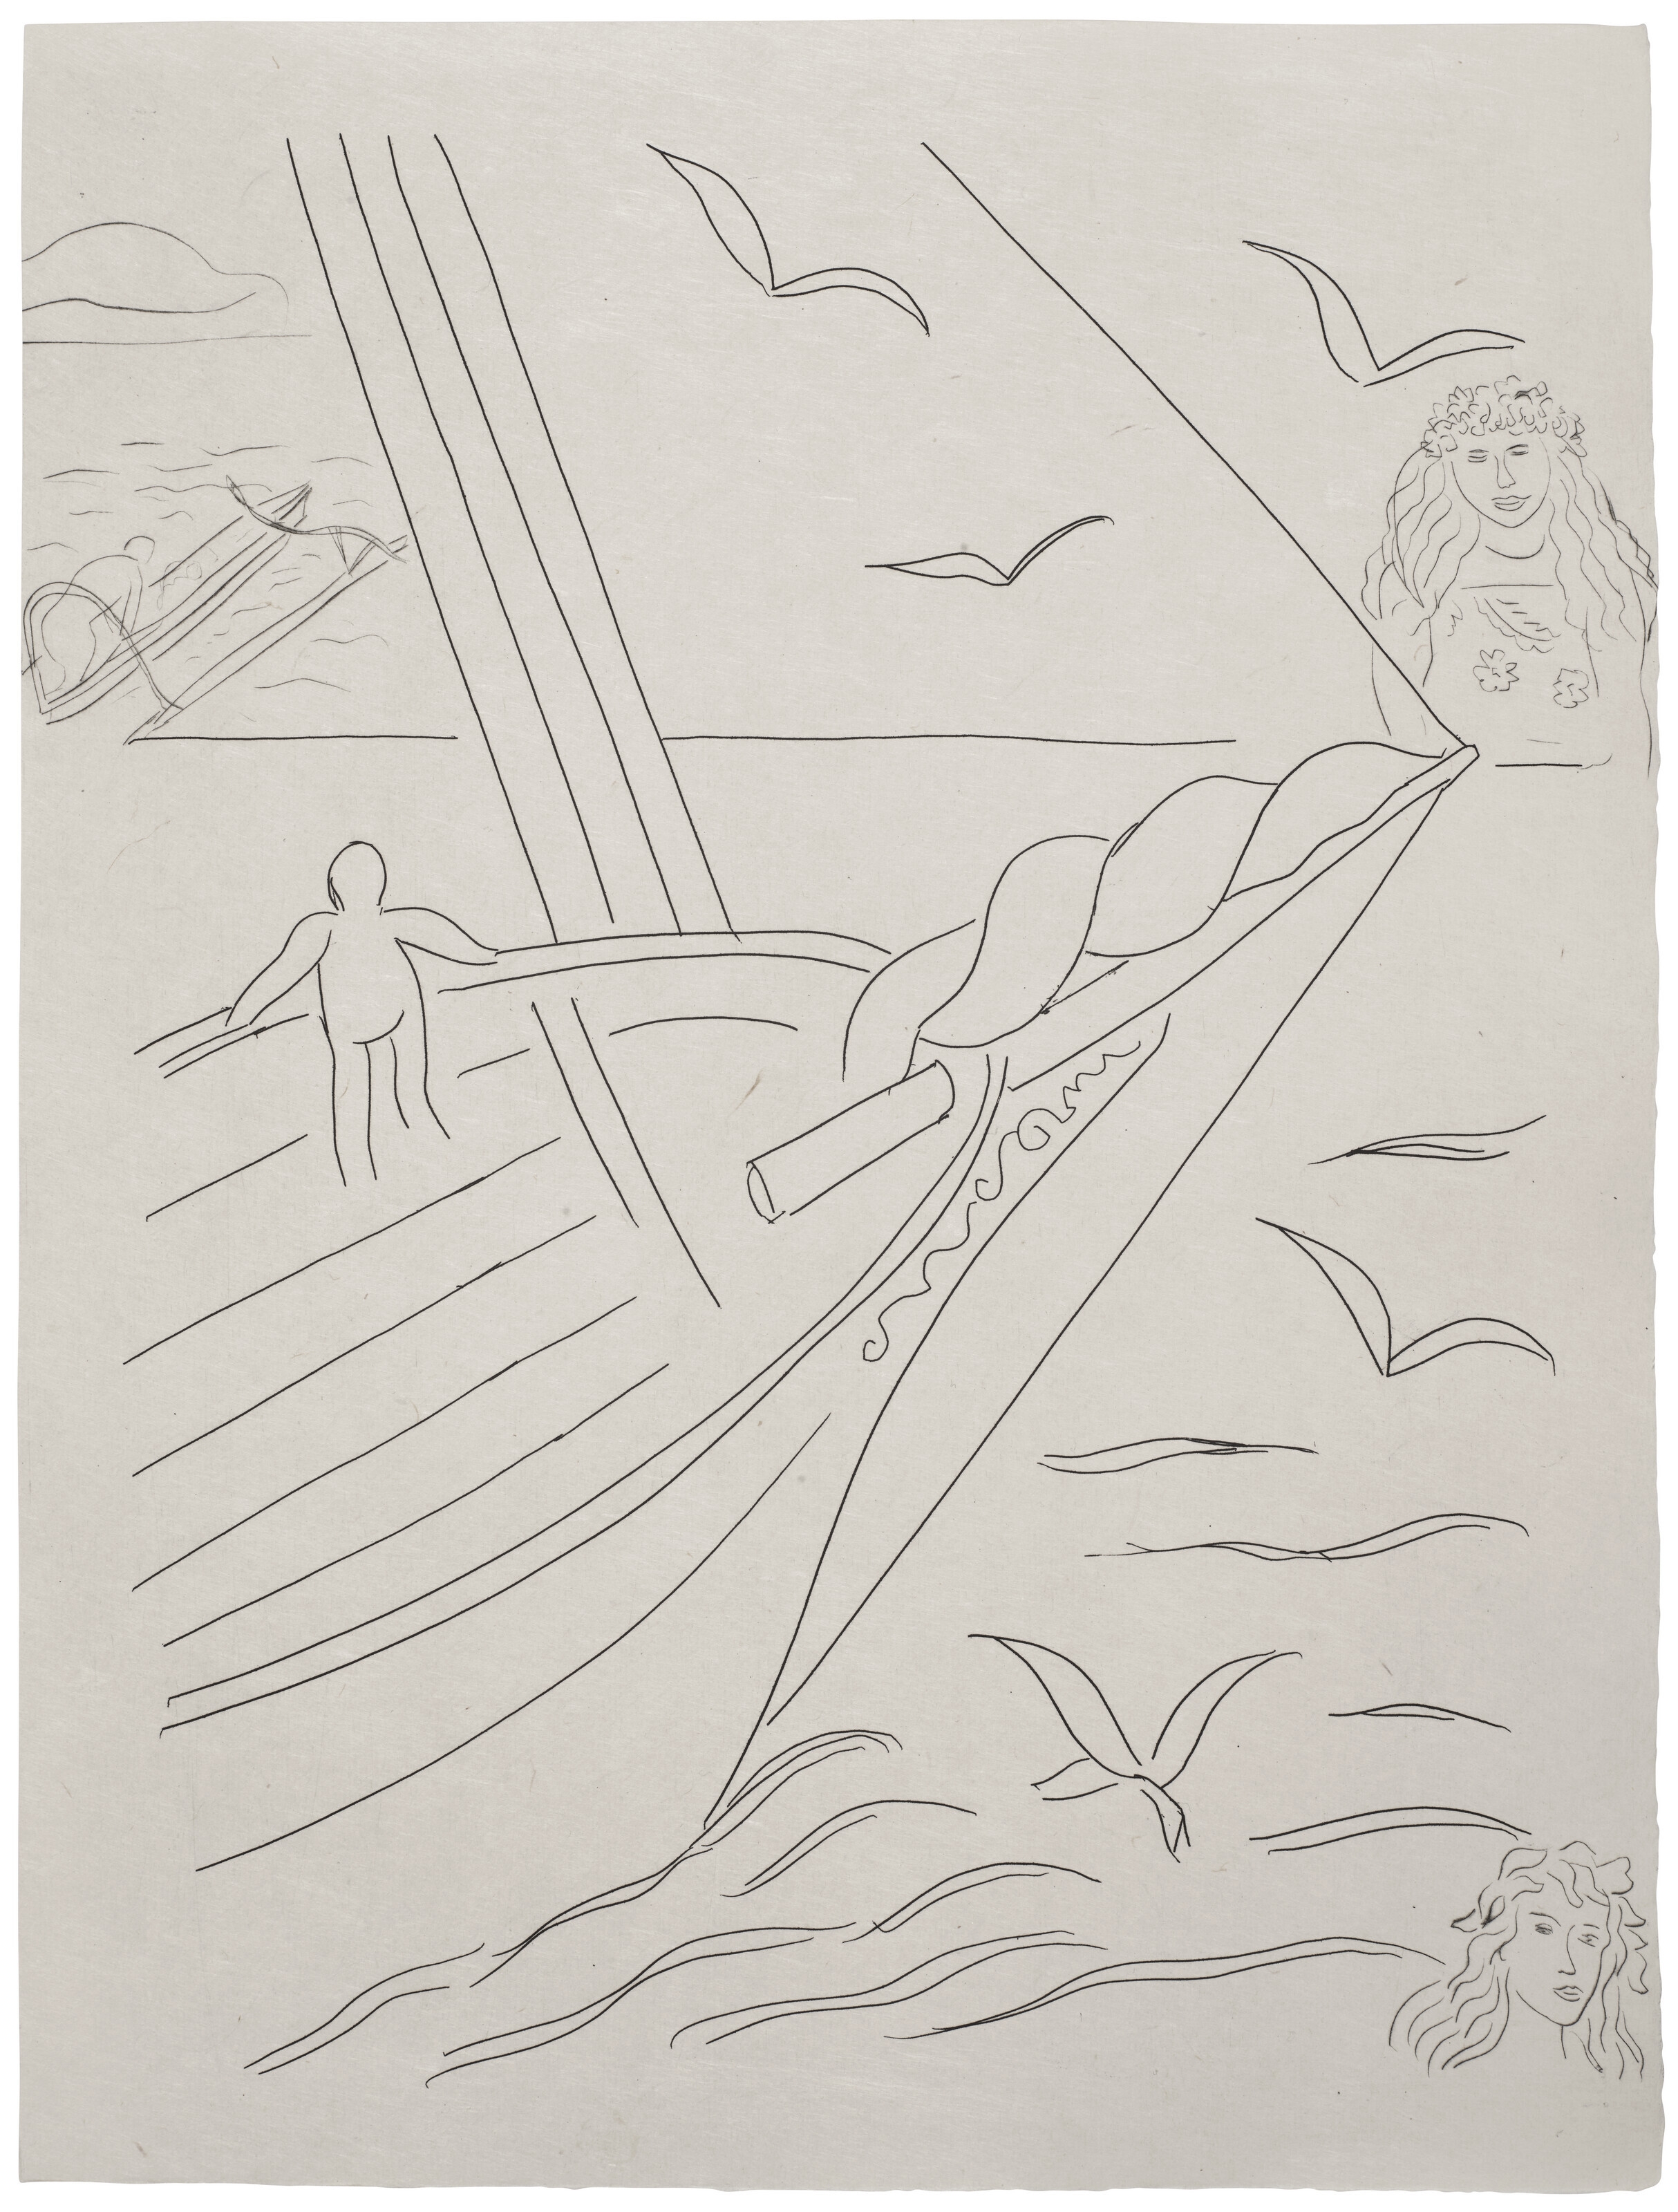 Artwork by Henri Matisse, Stéphane Mallarmé, Poésies, Made of etchings, on Japon paper